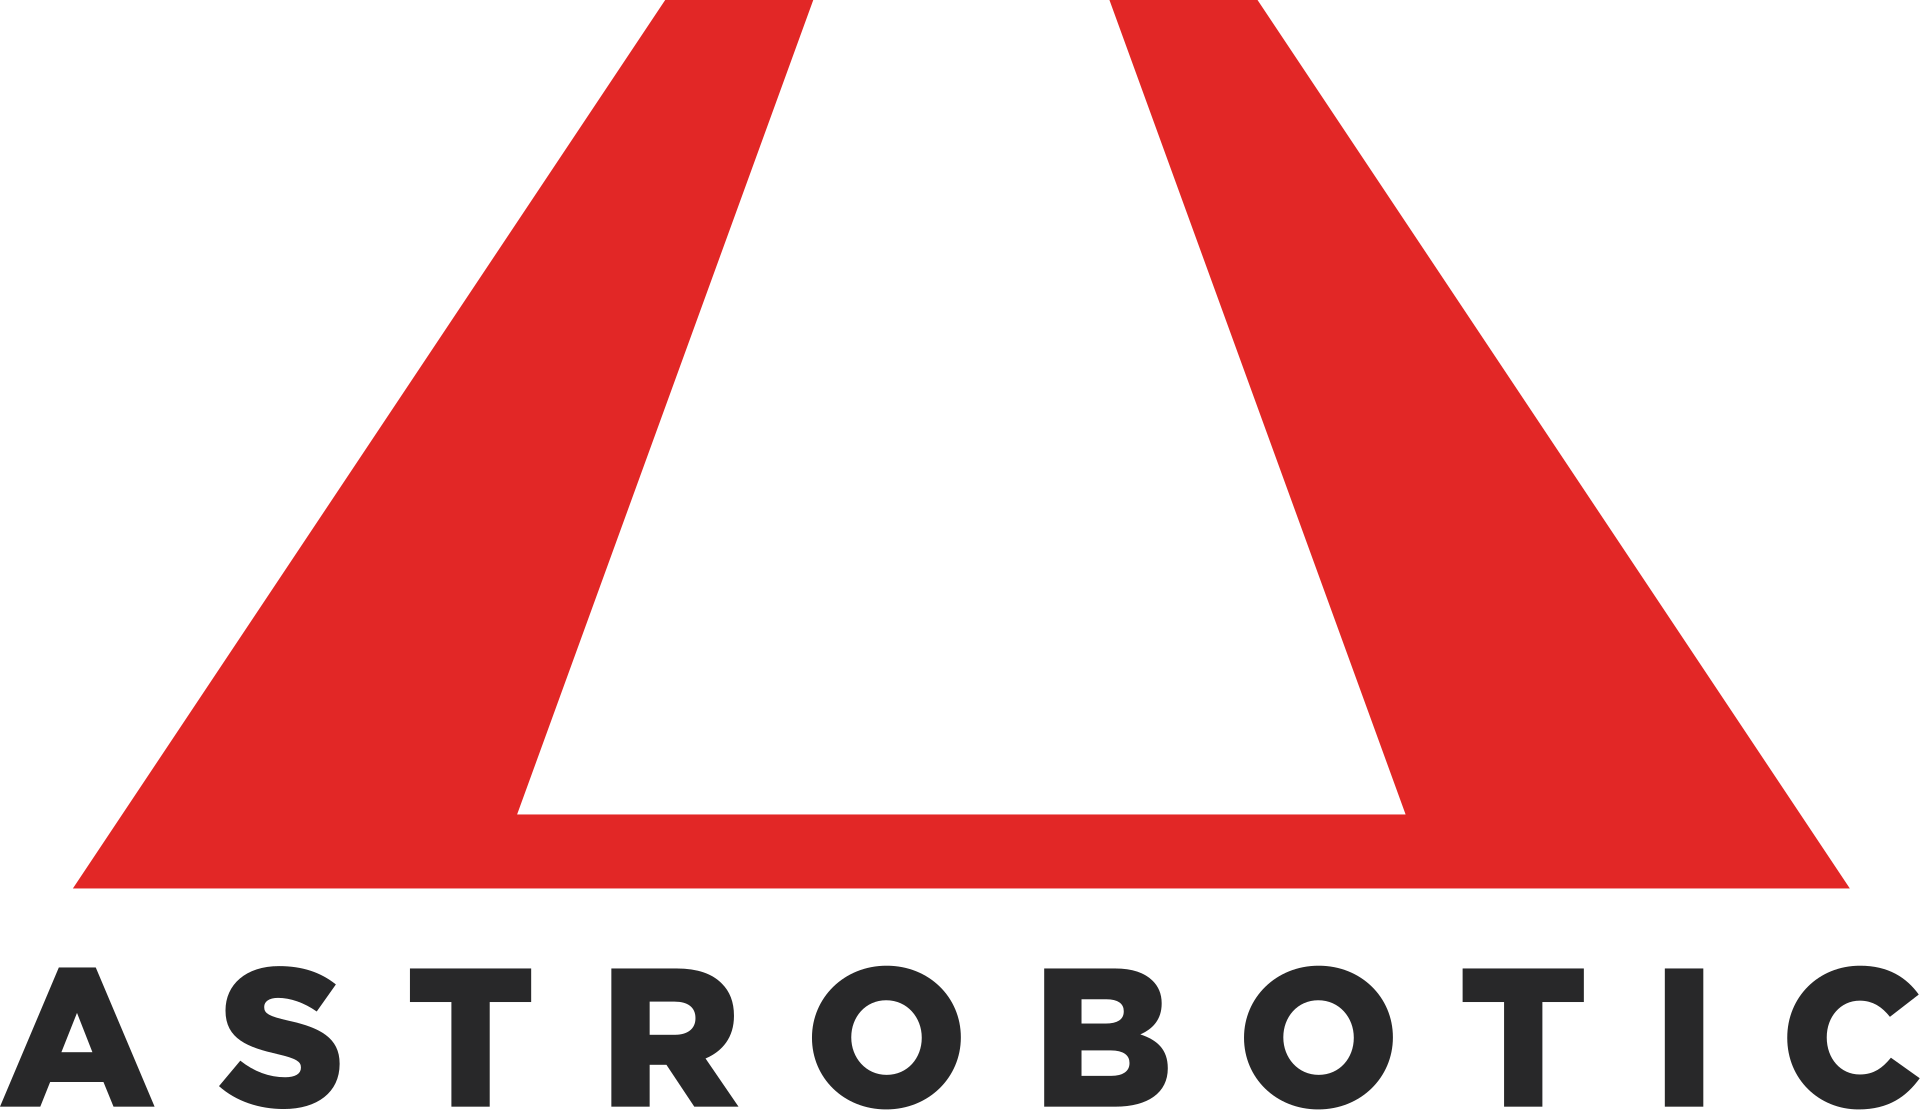 The logo of Astrobotic.